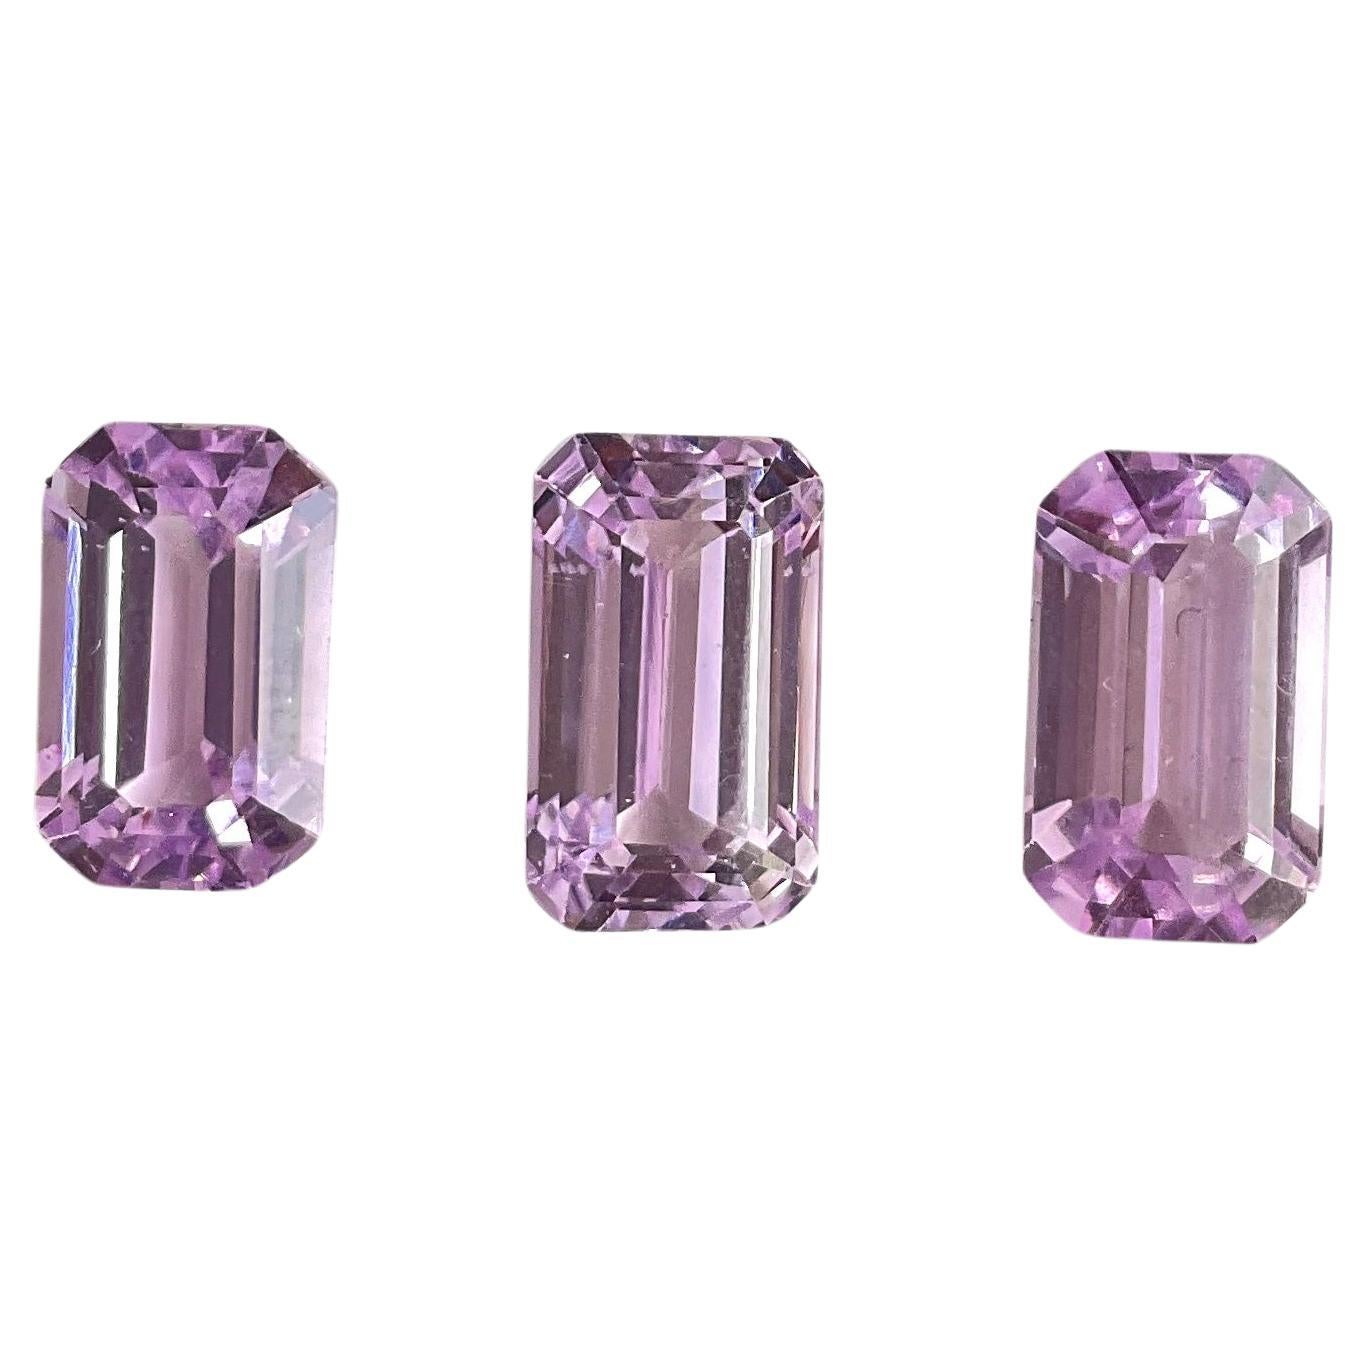 34.29 Carats Pink Kunzite Octagon Natural Cut Stones For Fine Gem Jewellery